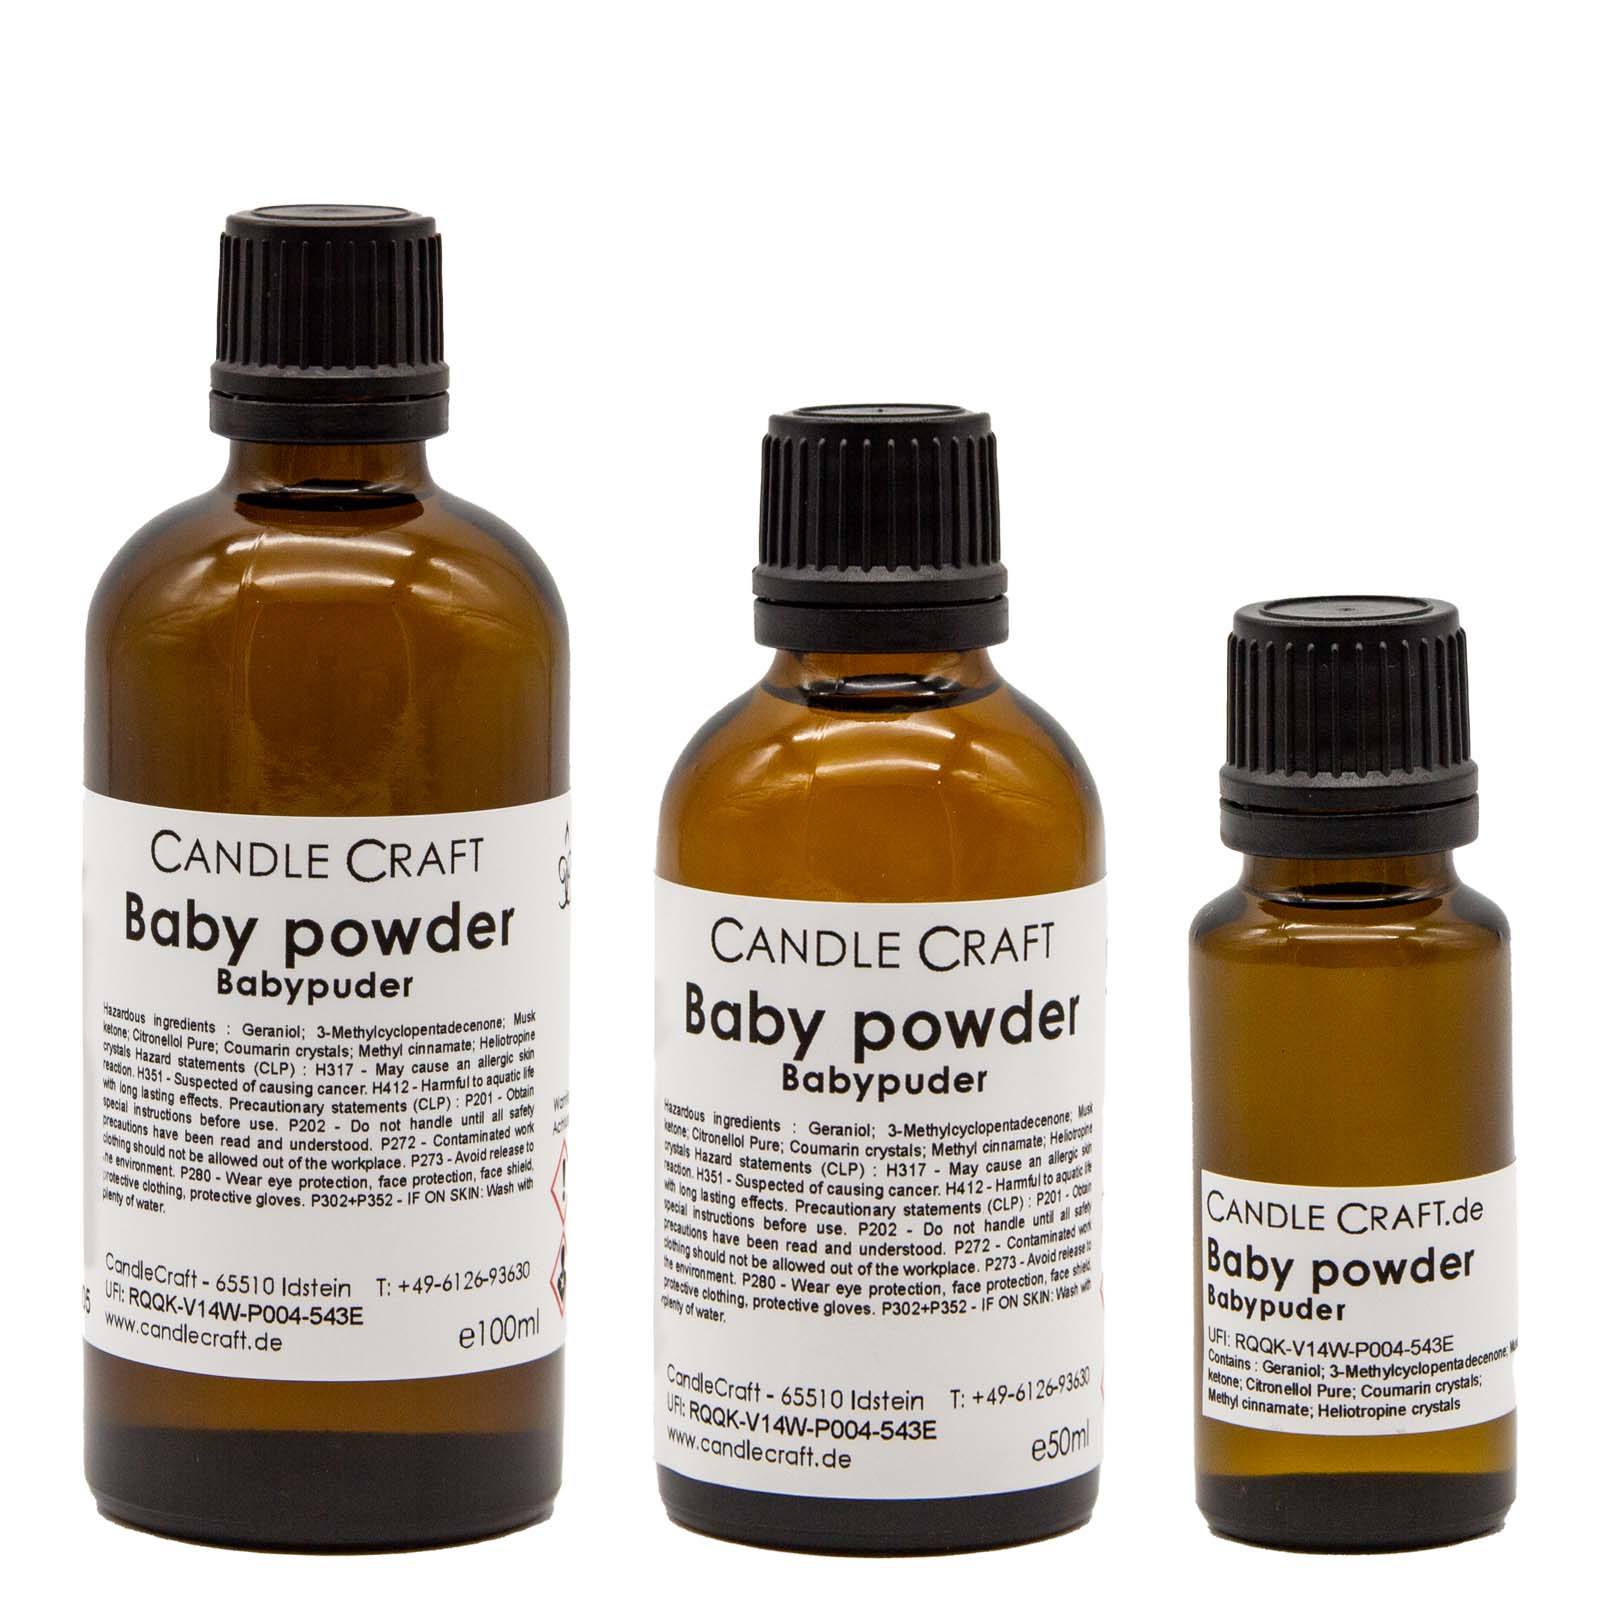 Baby Powder Fragrance